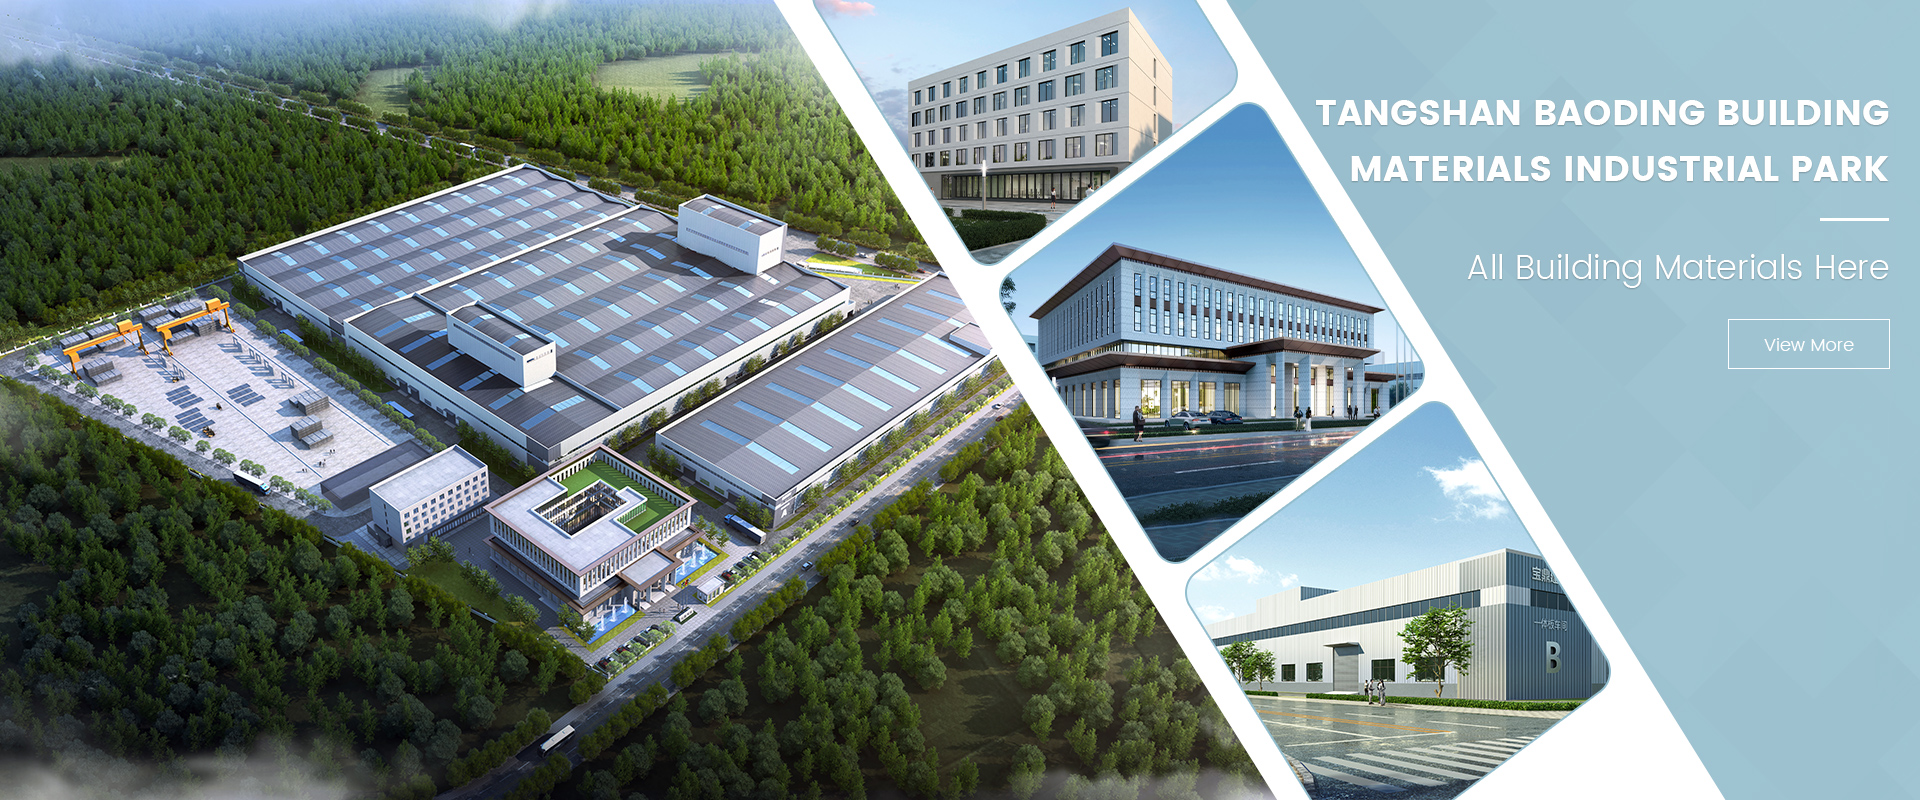 Tangshan Baoding Building Materials Industrial Park